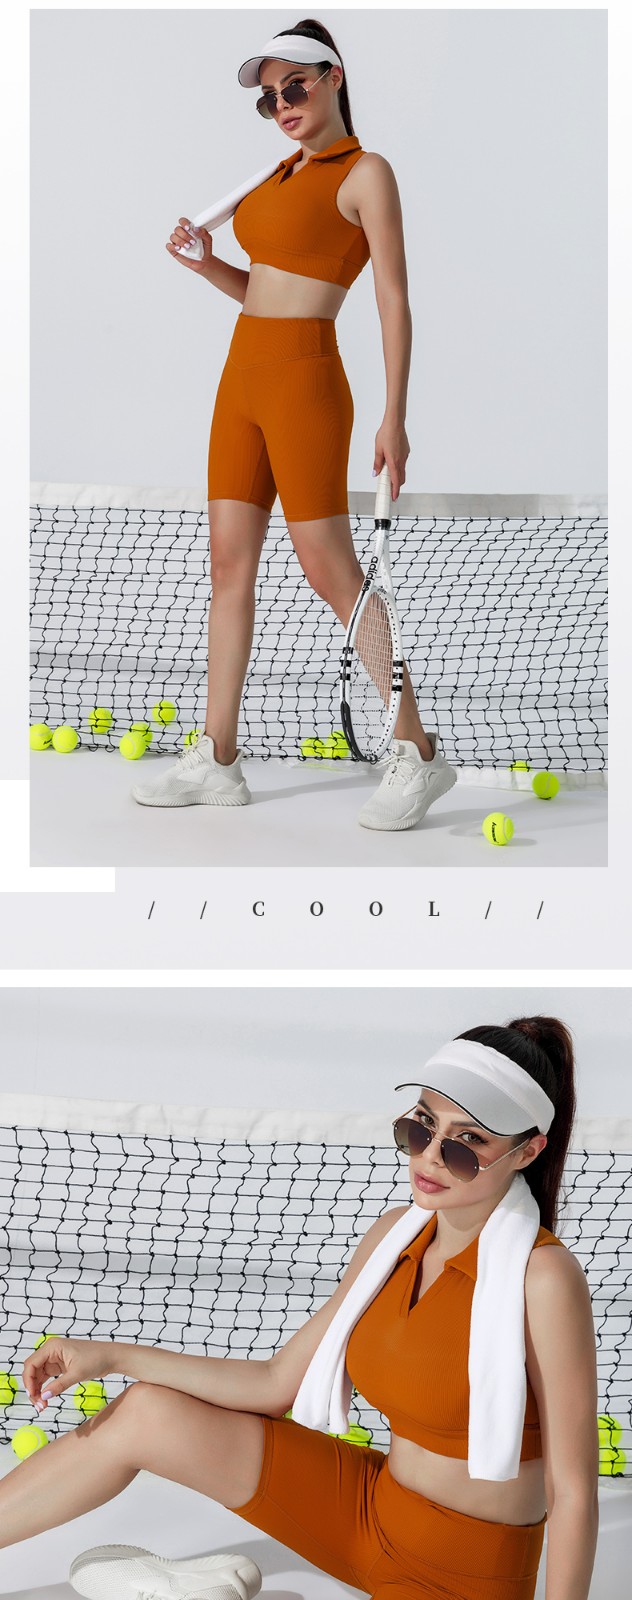 custom tennis wear ladies supplier for yoga-4